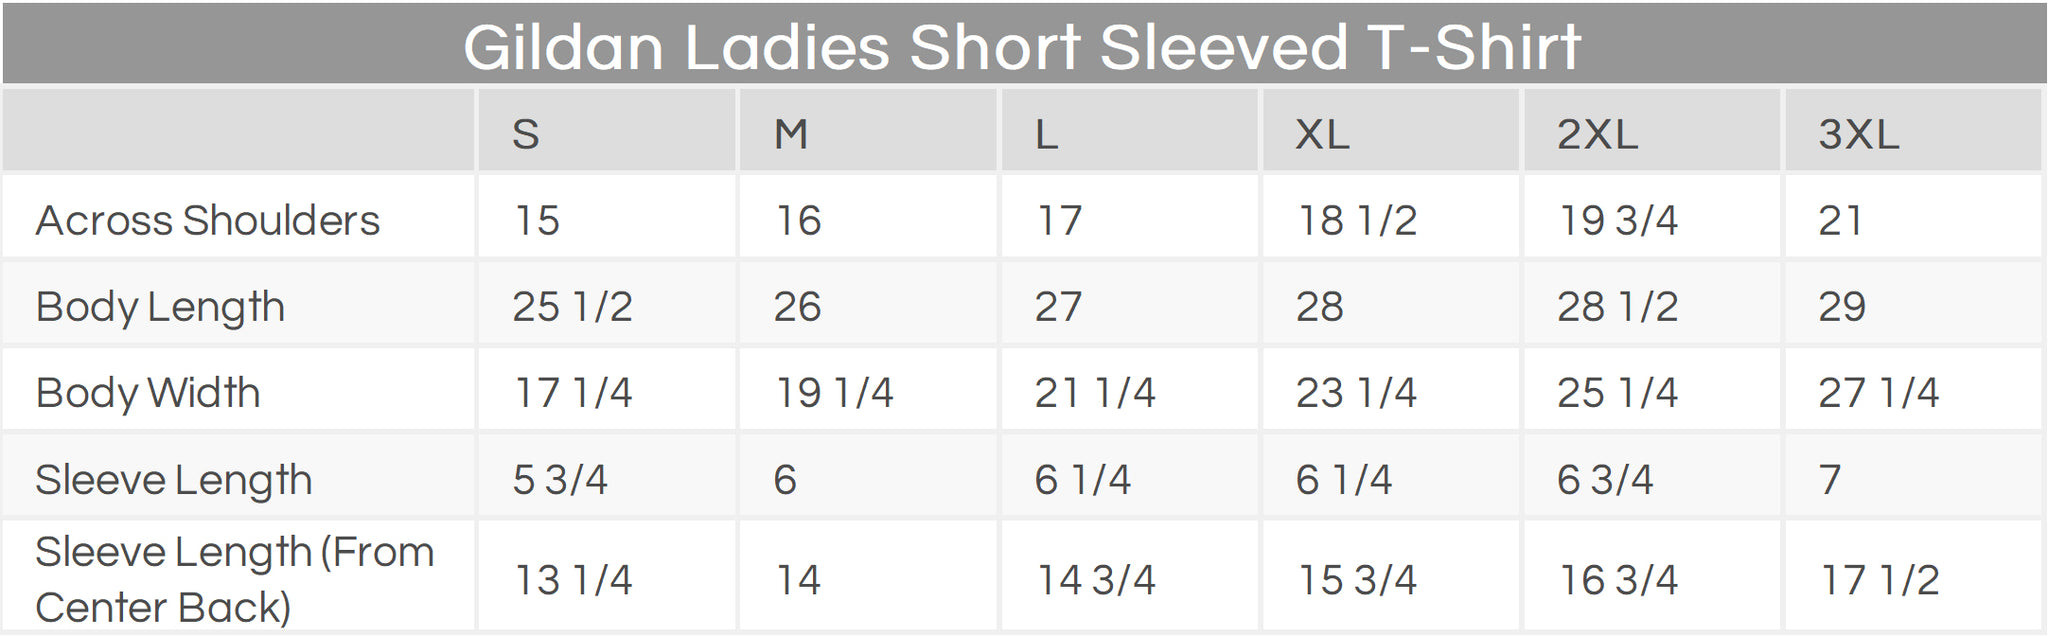 Gildan Ladies Short Sleeved T-Shirt Size Chart